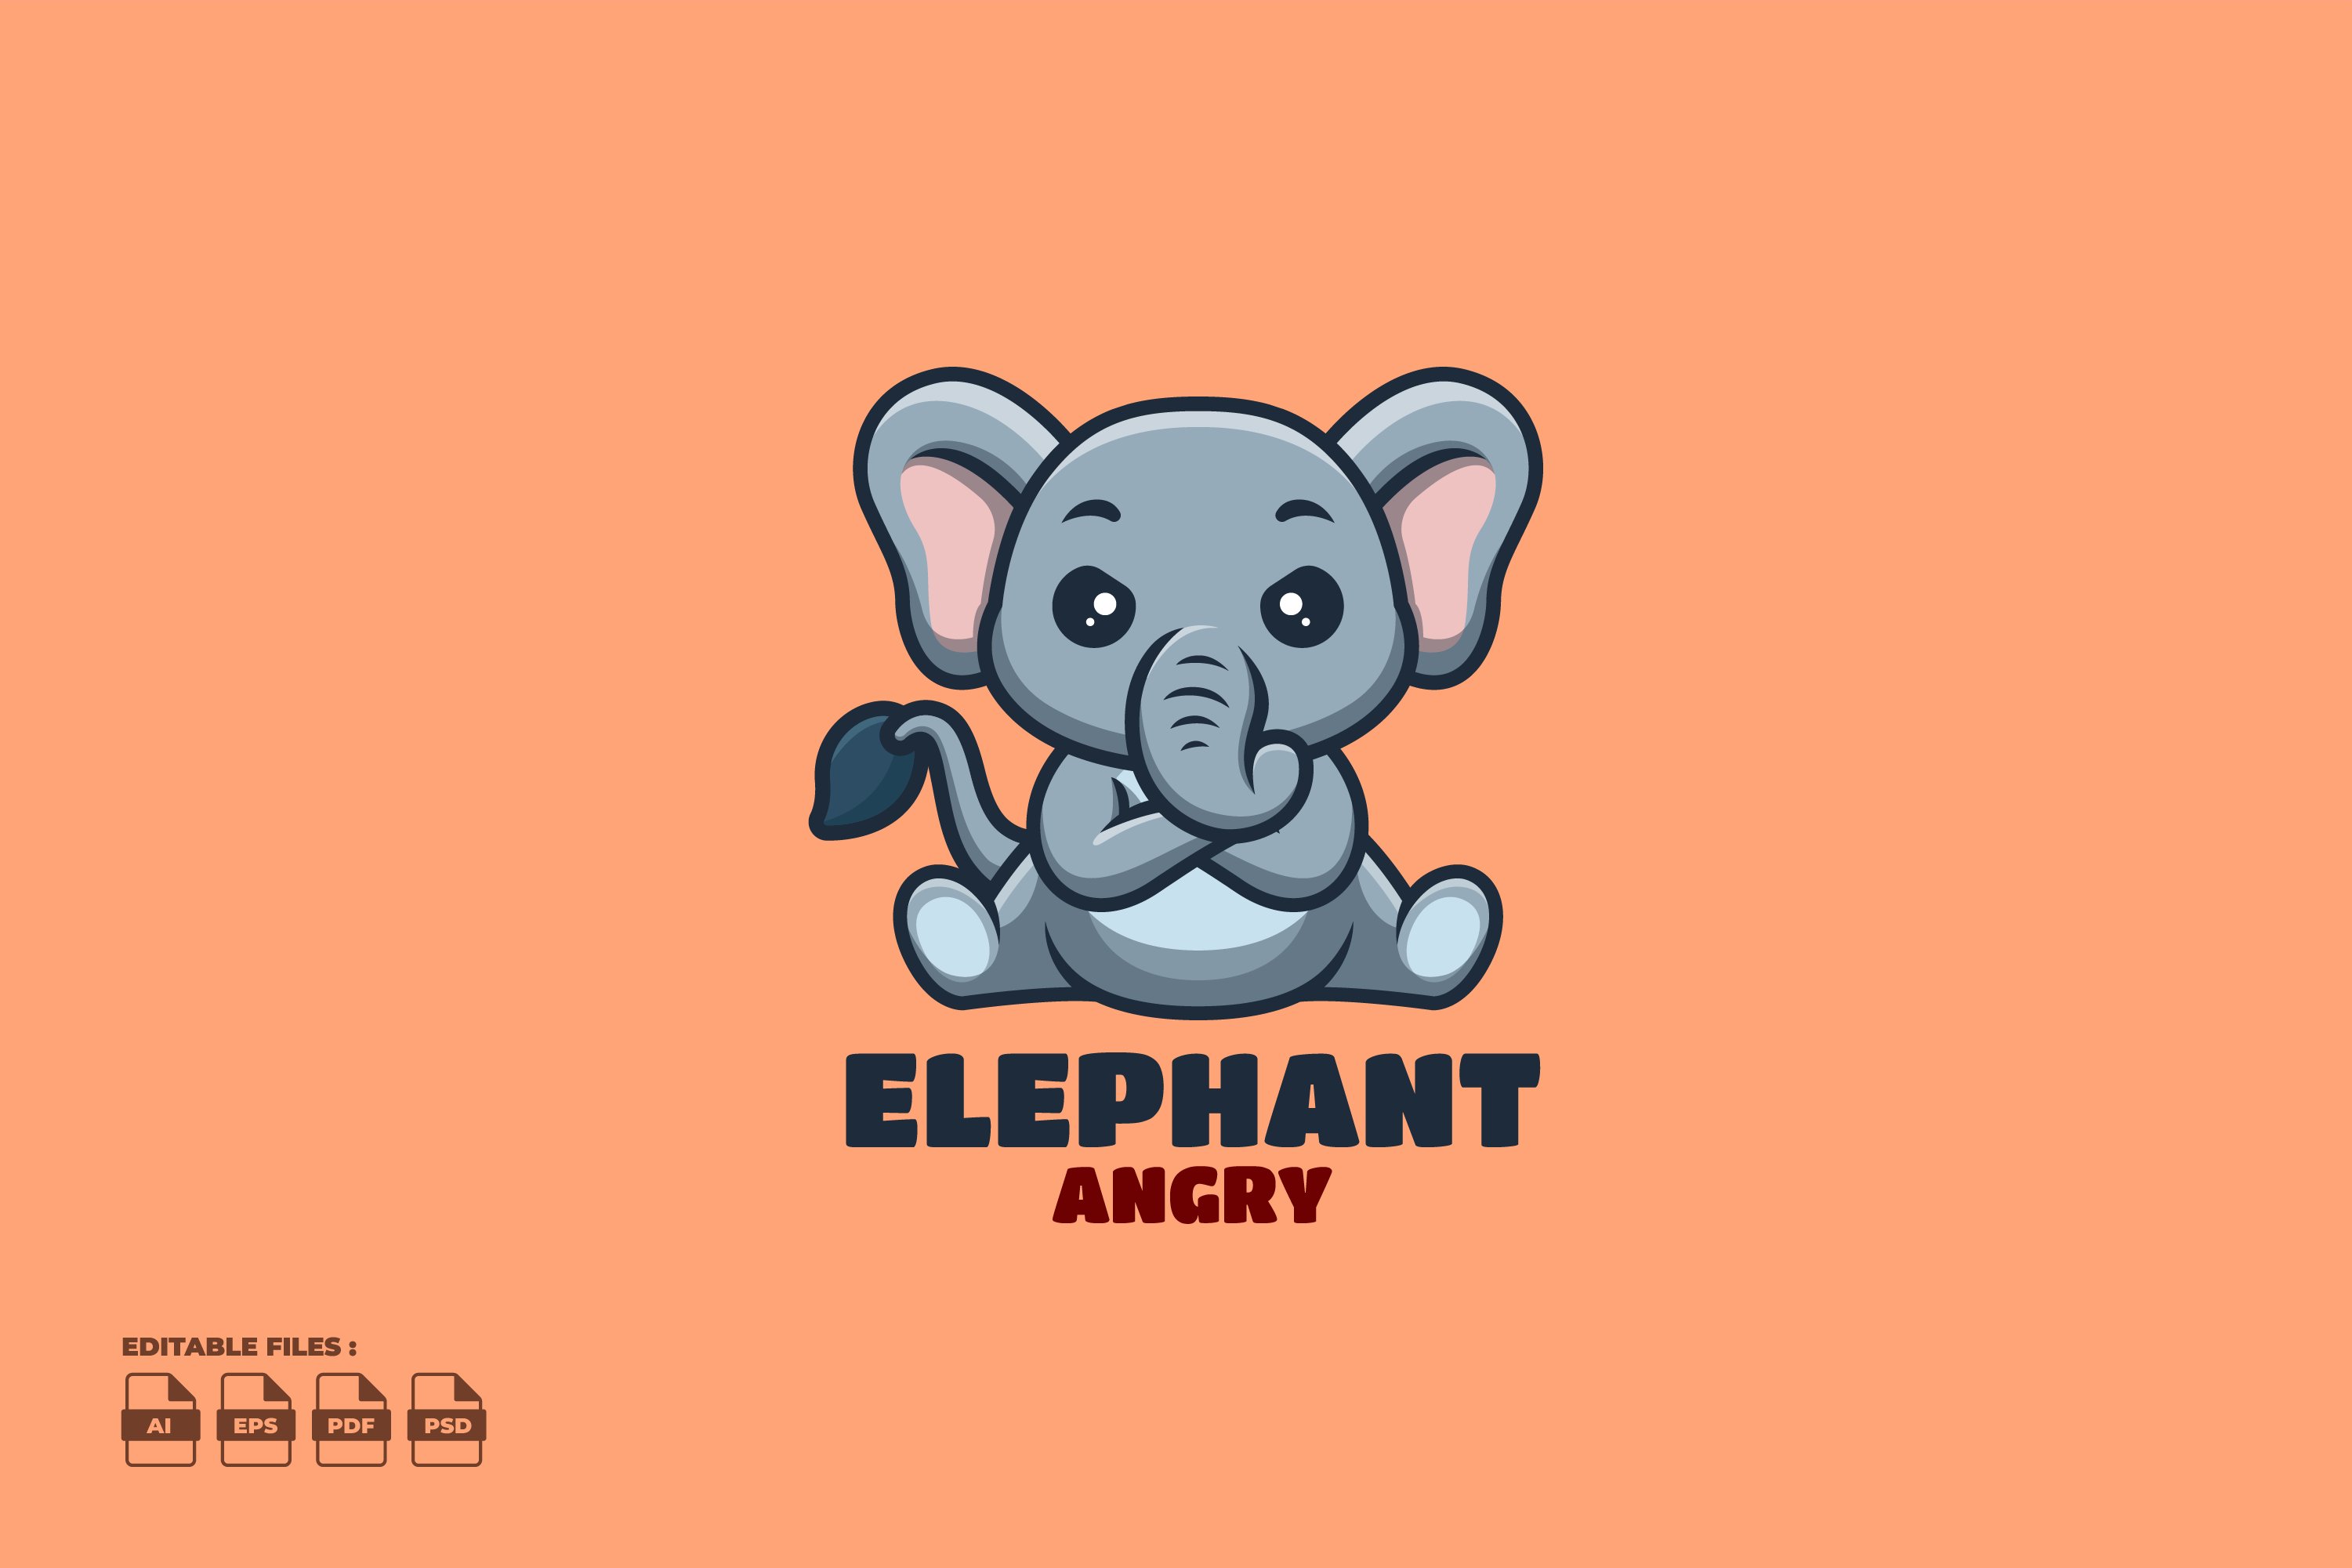 Angry Elephant Cute Mascot Logo cover image.